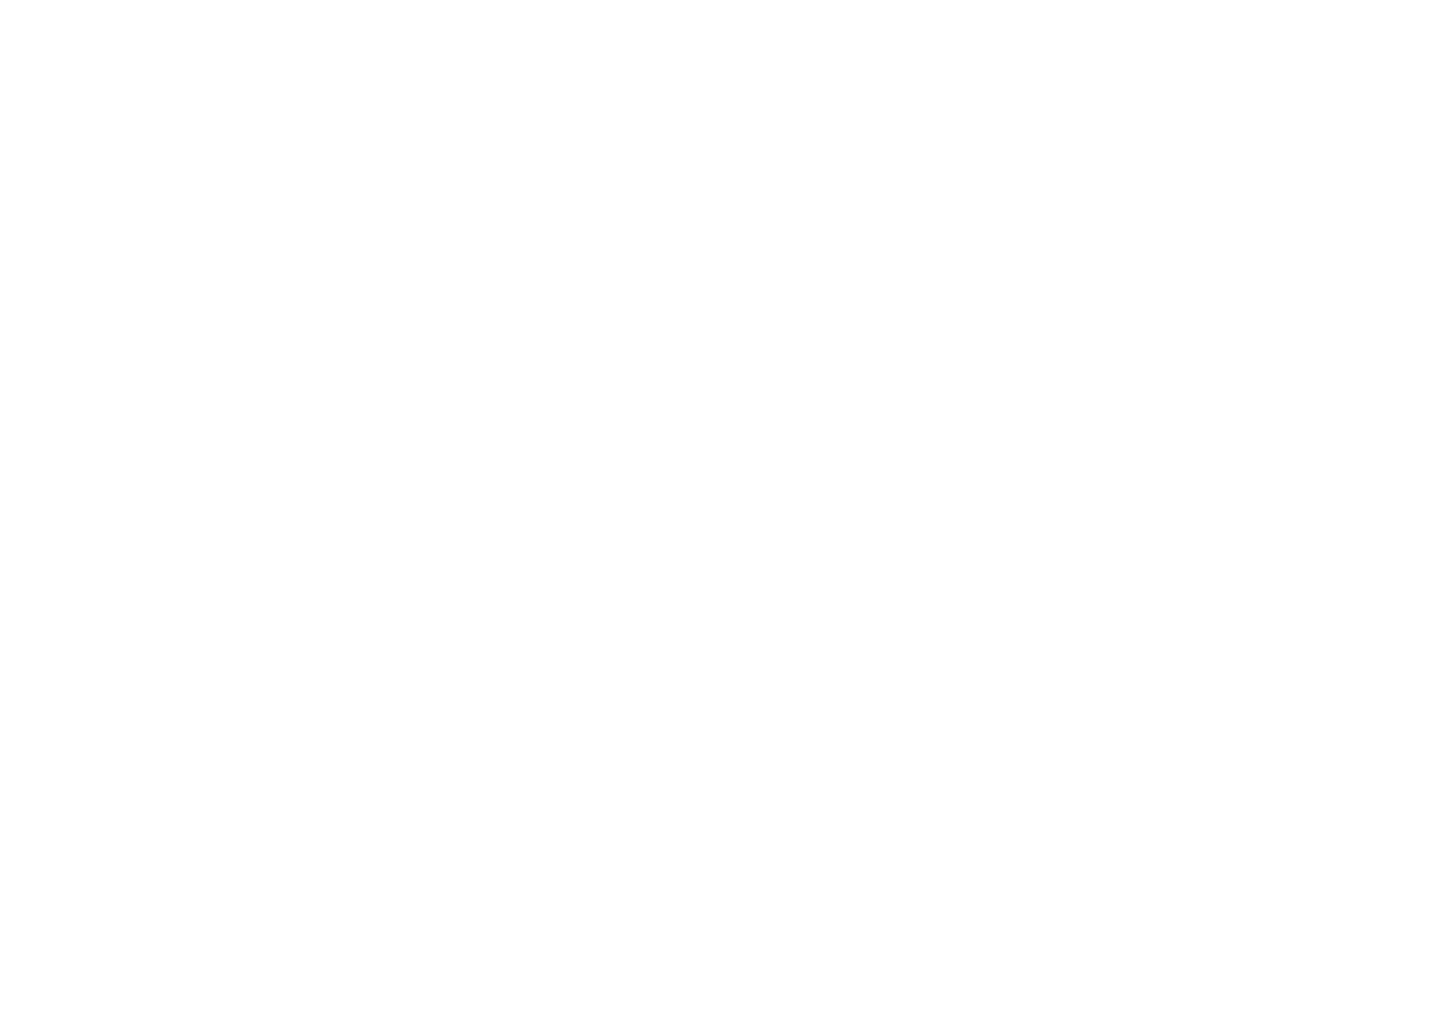 artfuneral.com